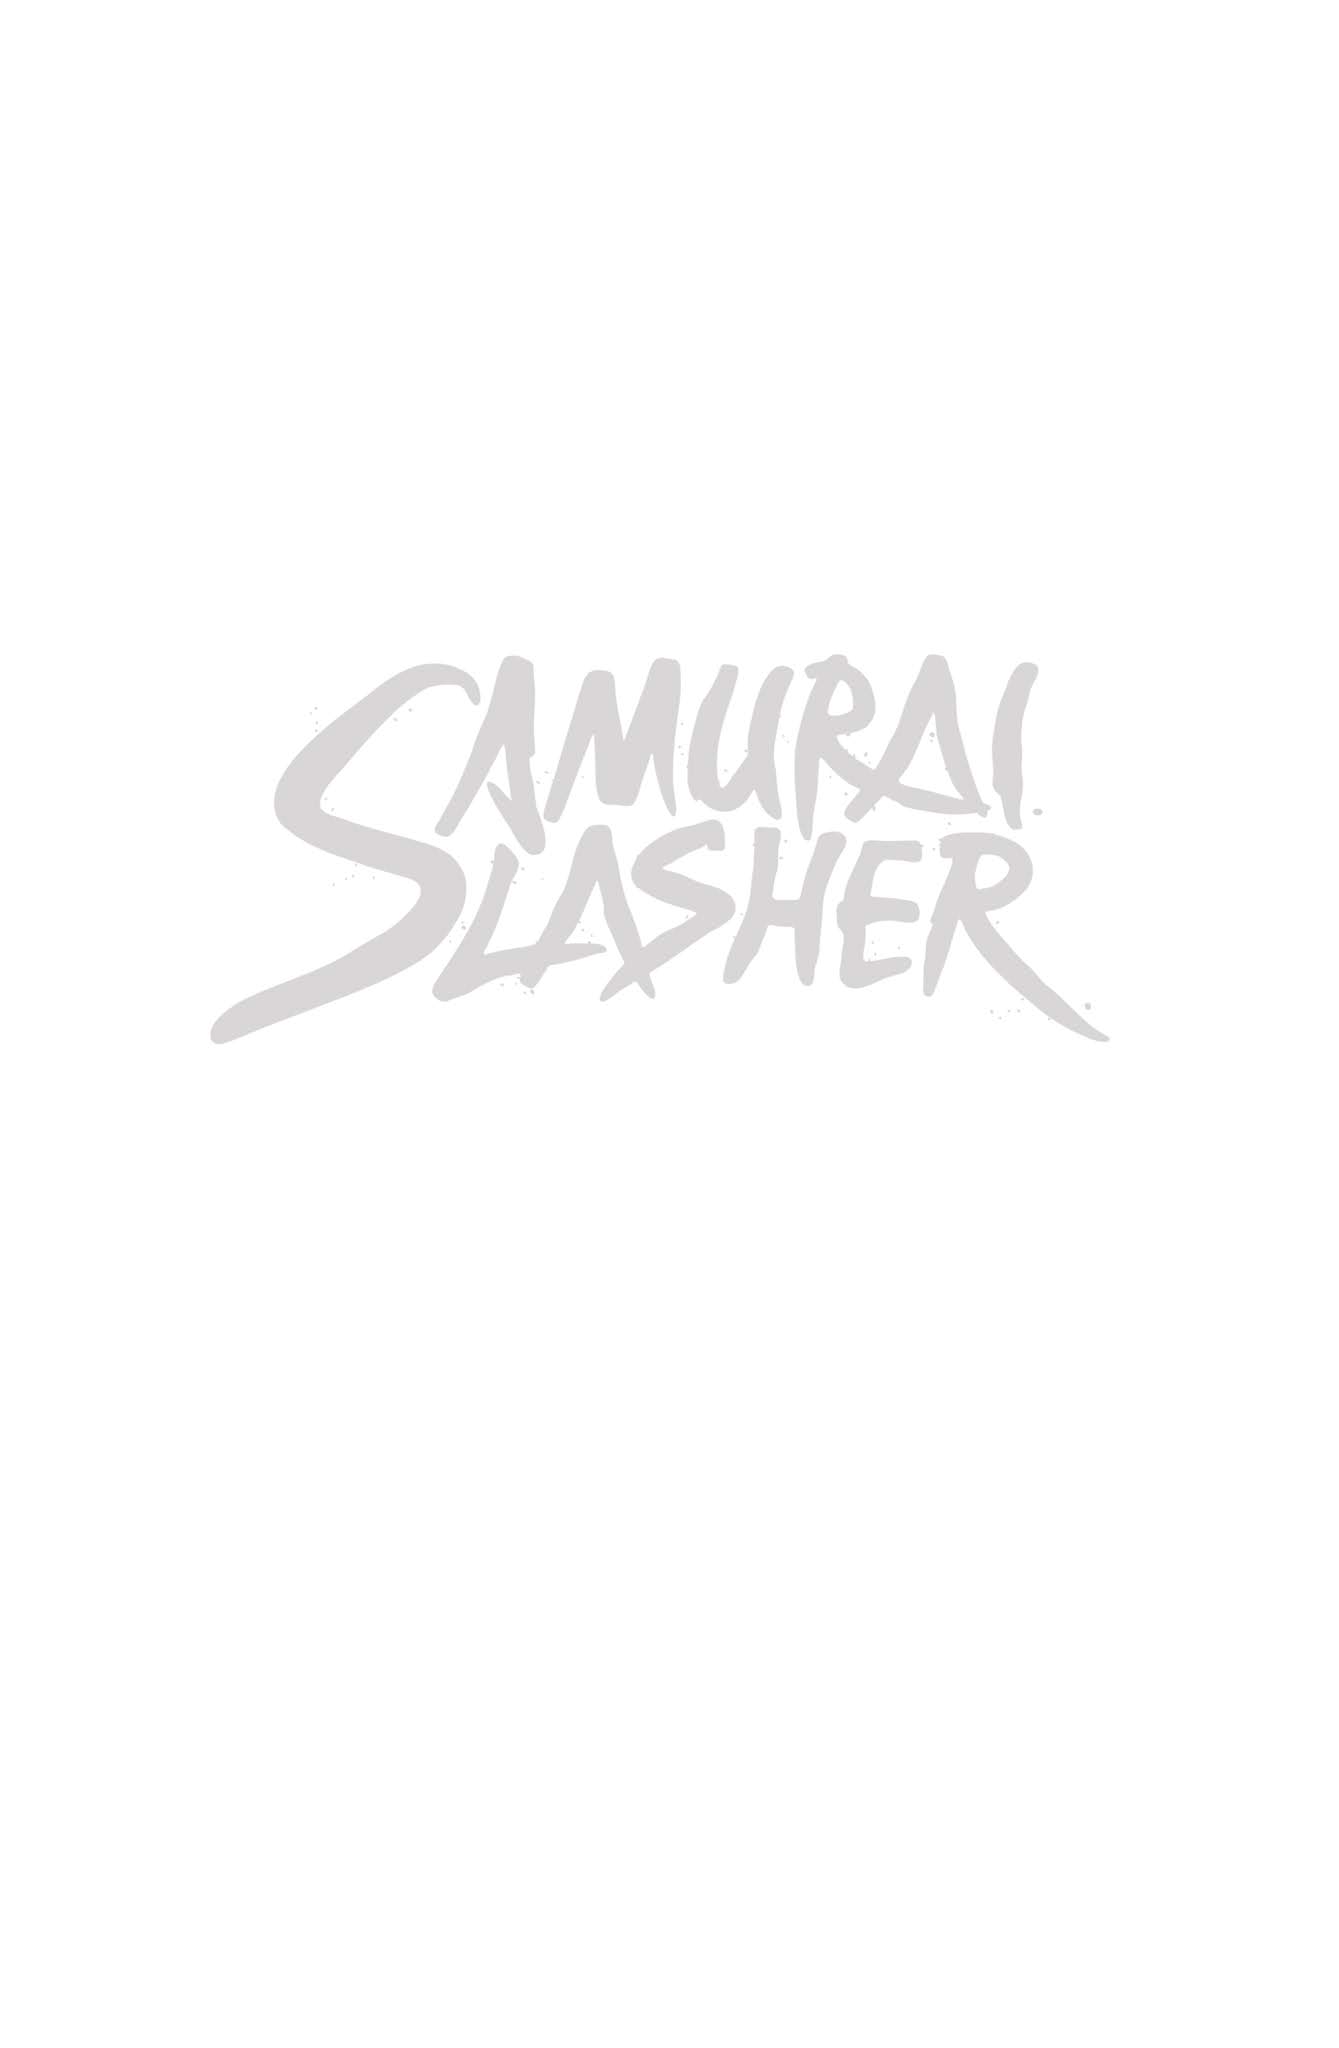 Read online Samurai Slasher comic -  Issue # TPB 2 - 13